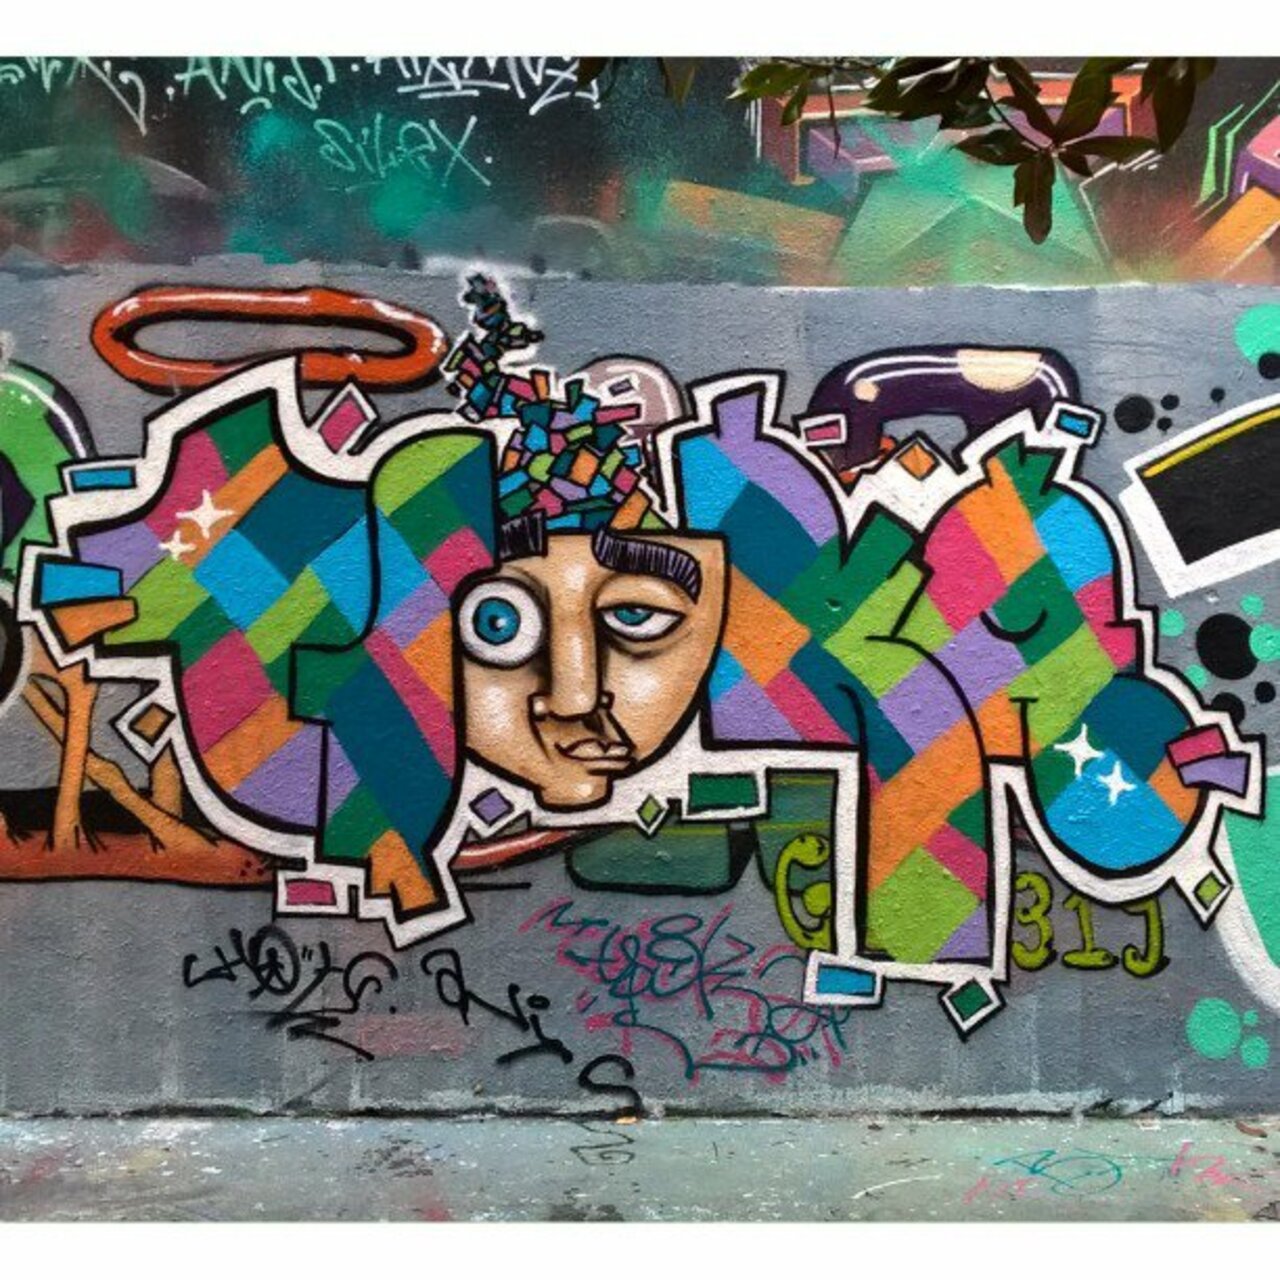 #streetart #graffiti #graff #art #fatcap #bombing #sprayart #spraycanart #wallart #handstyle #lettering #urbanart #… https://t.co/nhF5gG81ZX